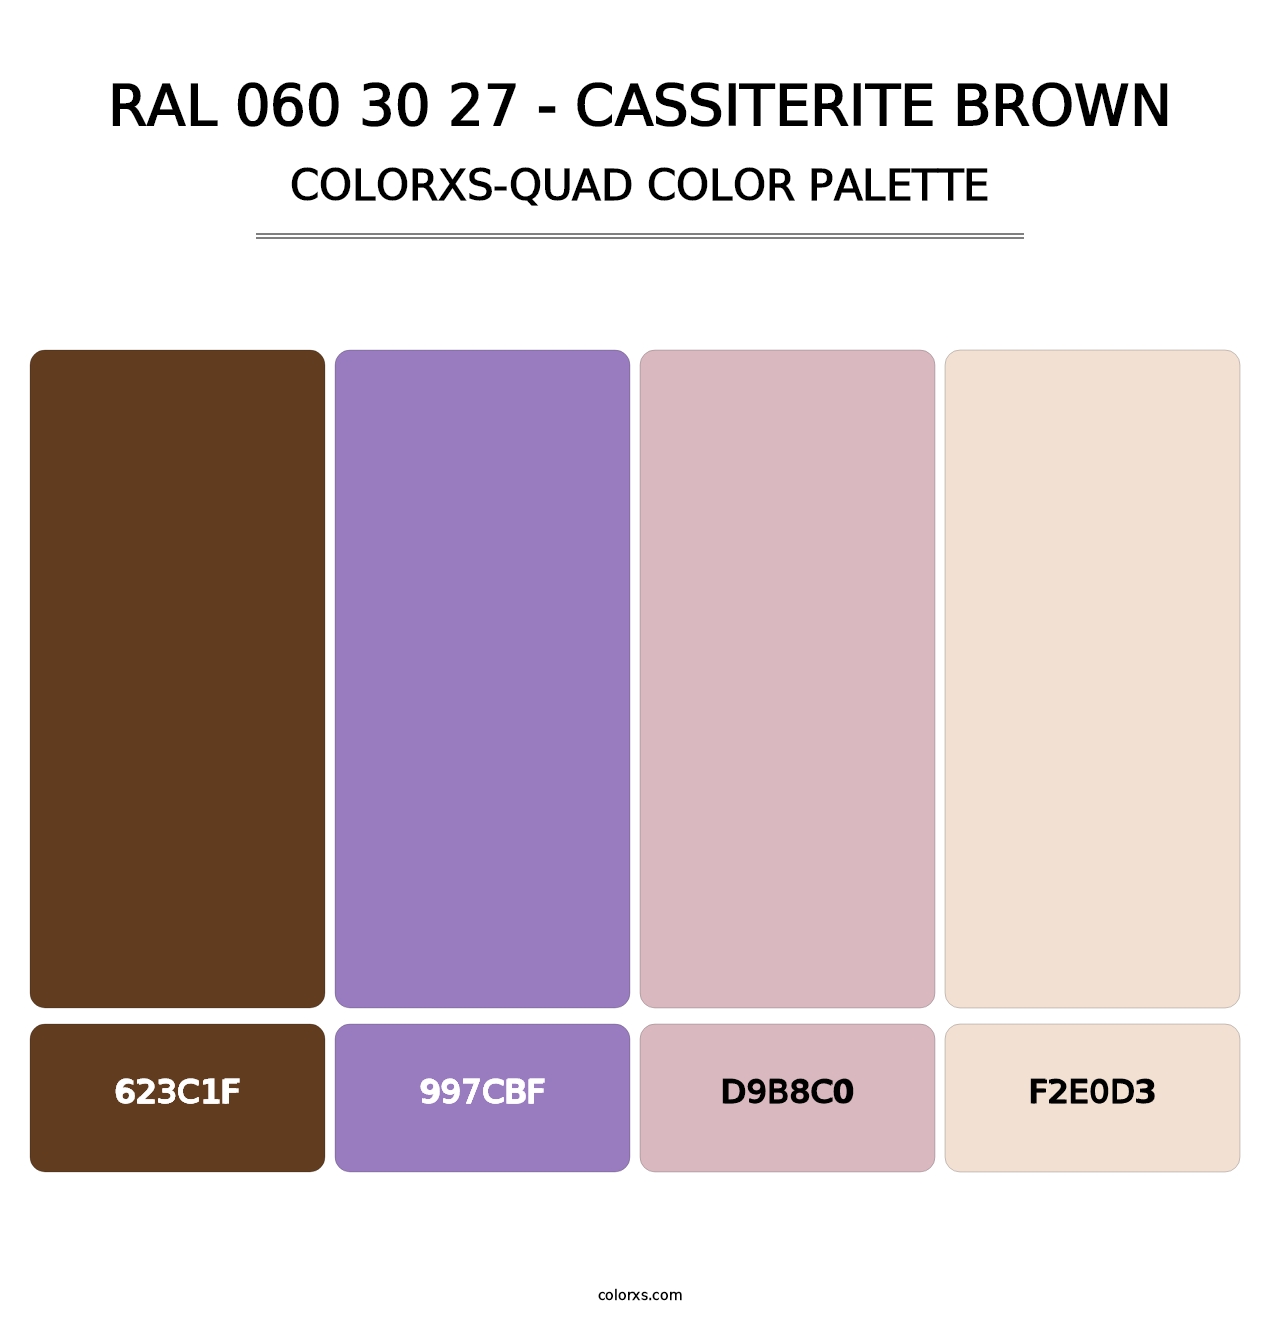 RAL 060 30 27 - Cassiterite Brown - Colorxs Quad Palette